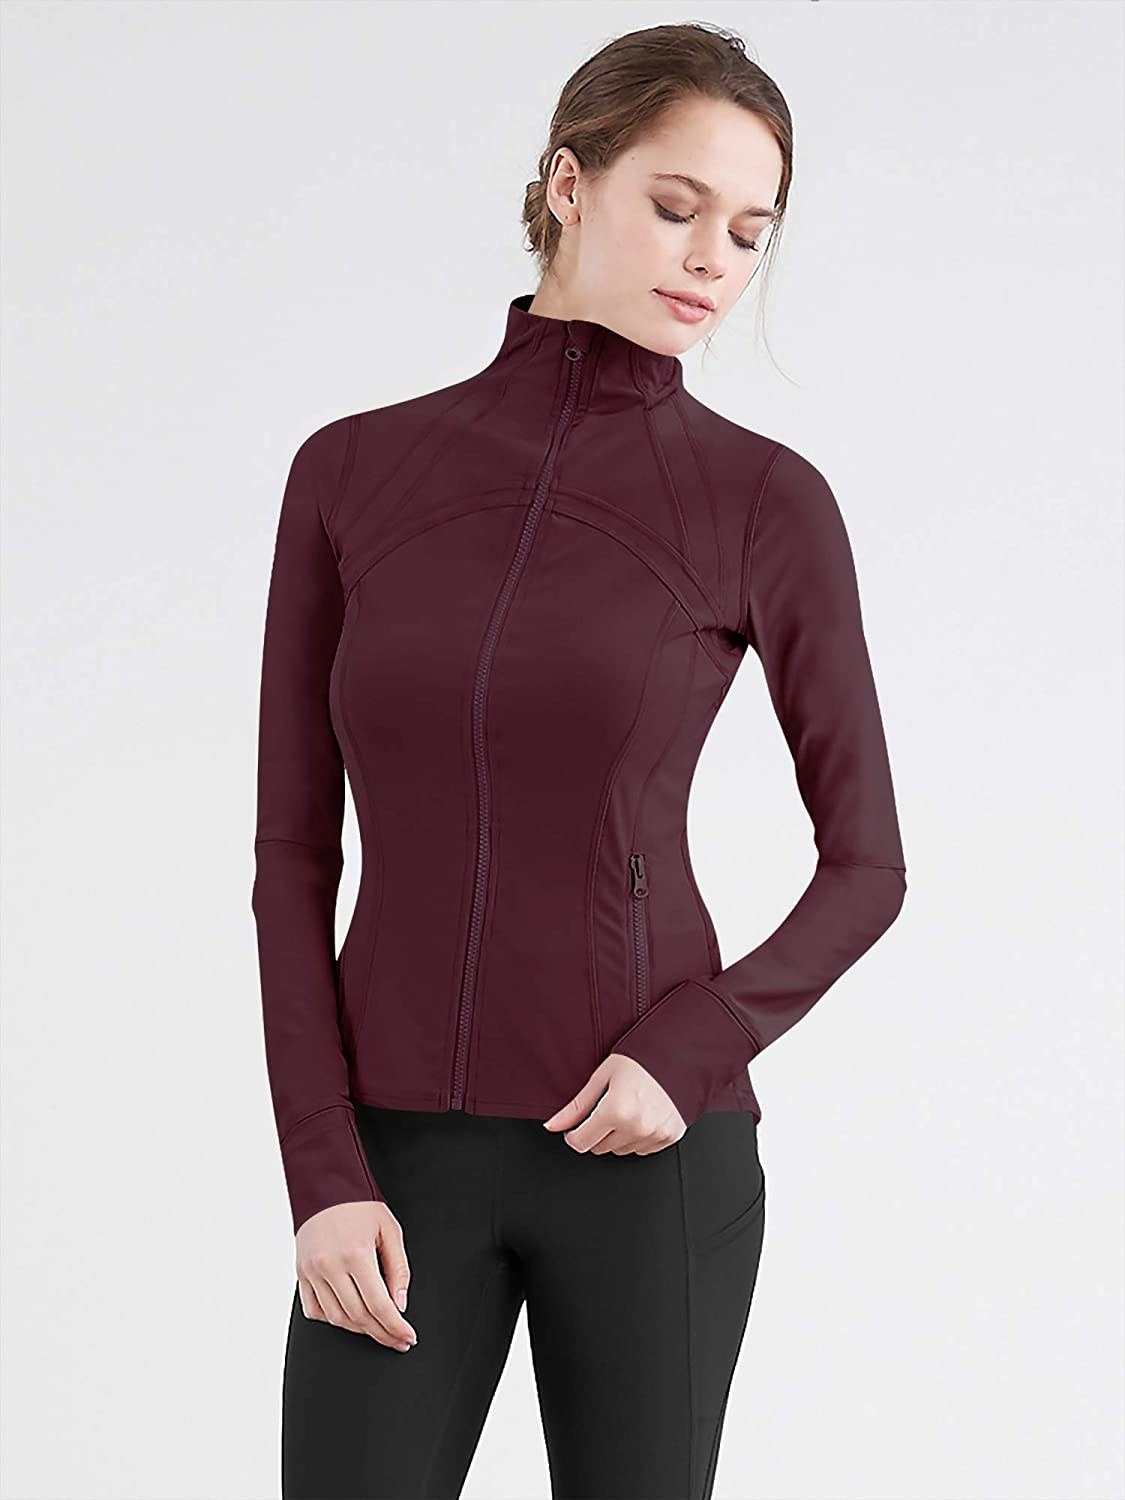 Model wears long-sleeve wine-colored zip-up track jacket with black leggings